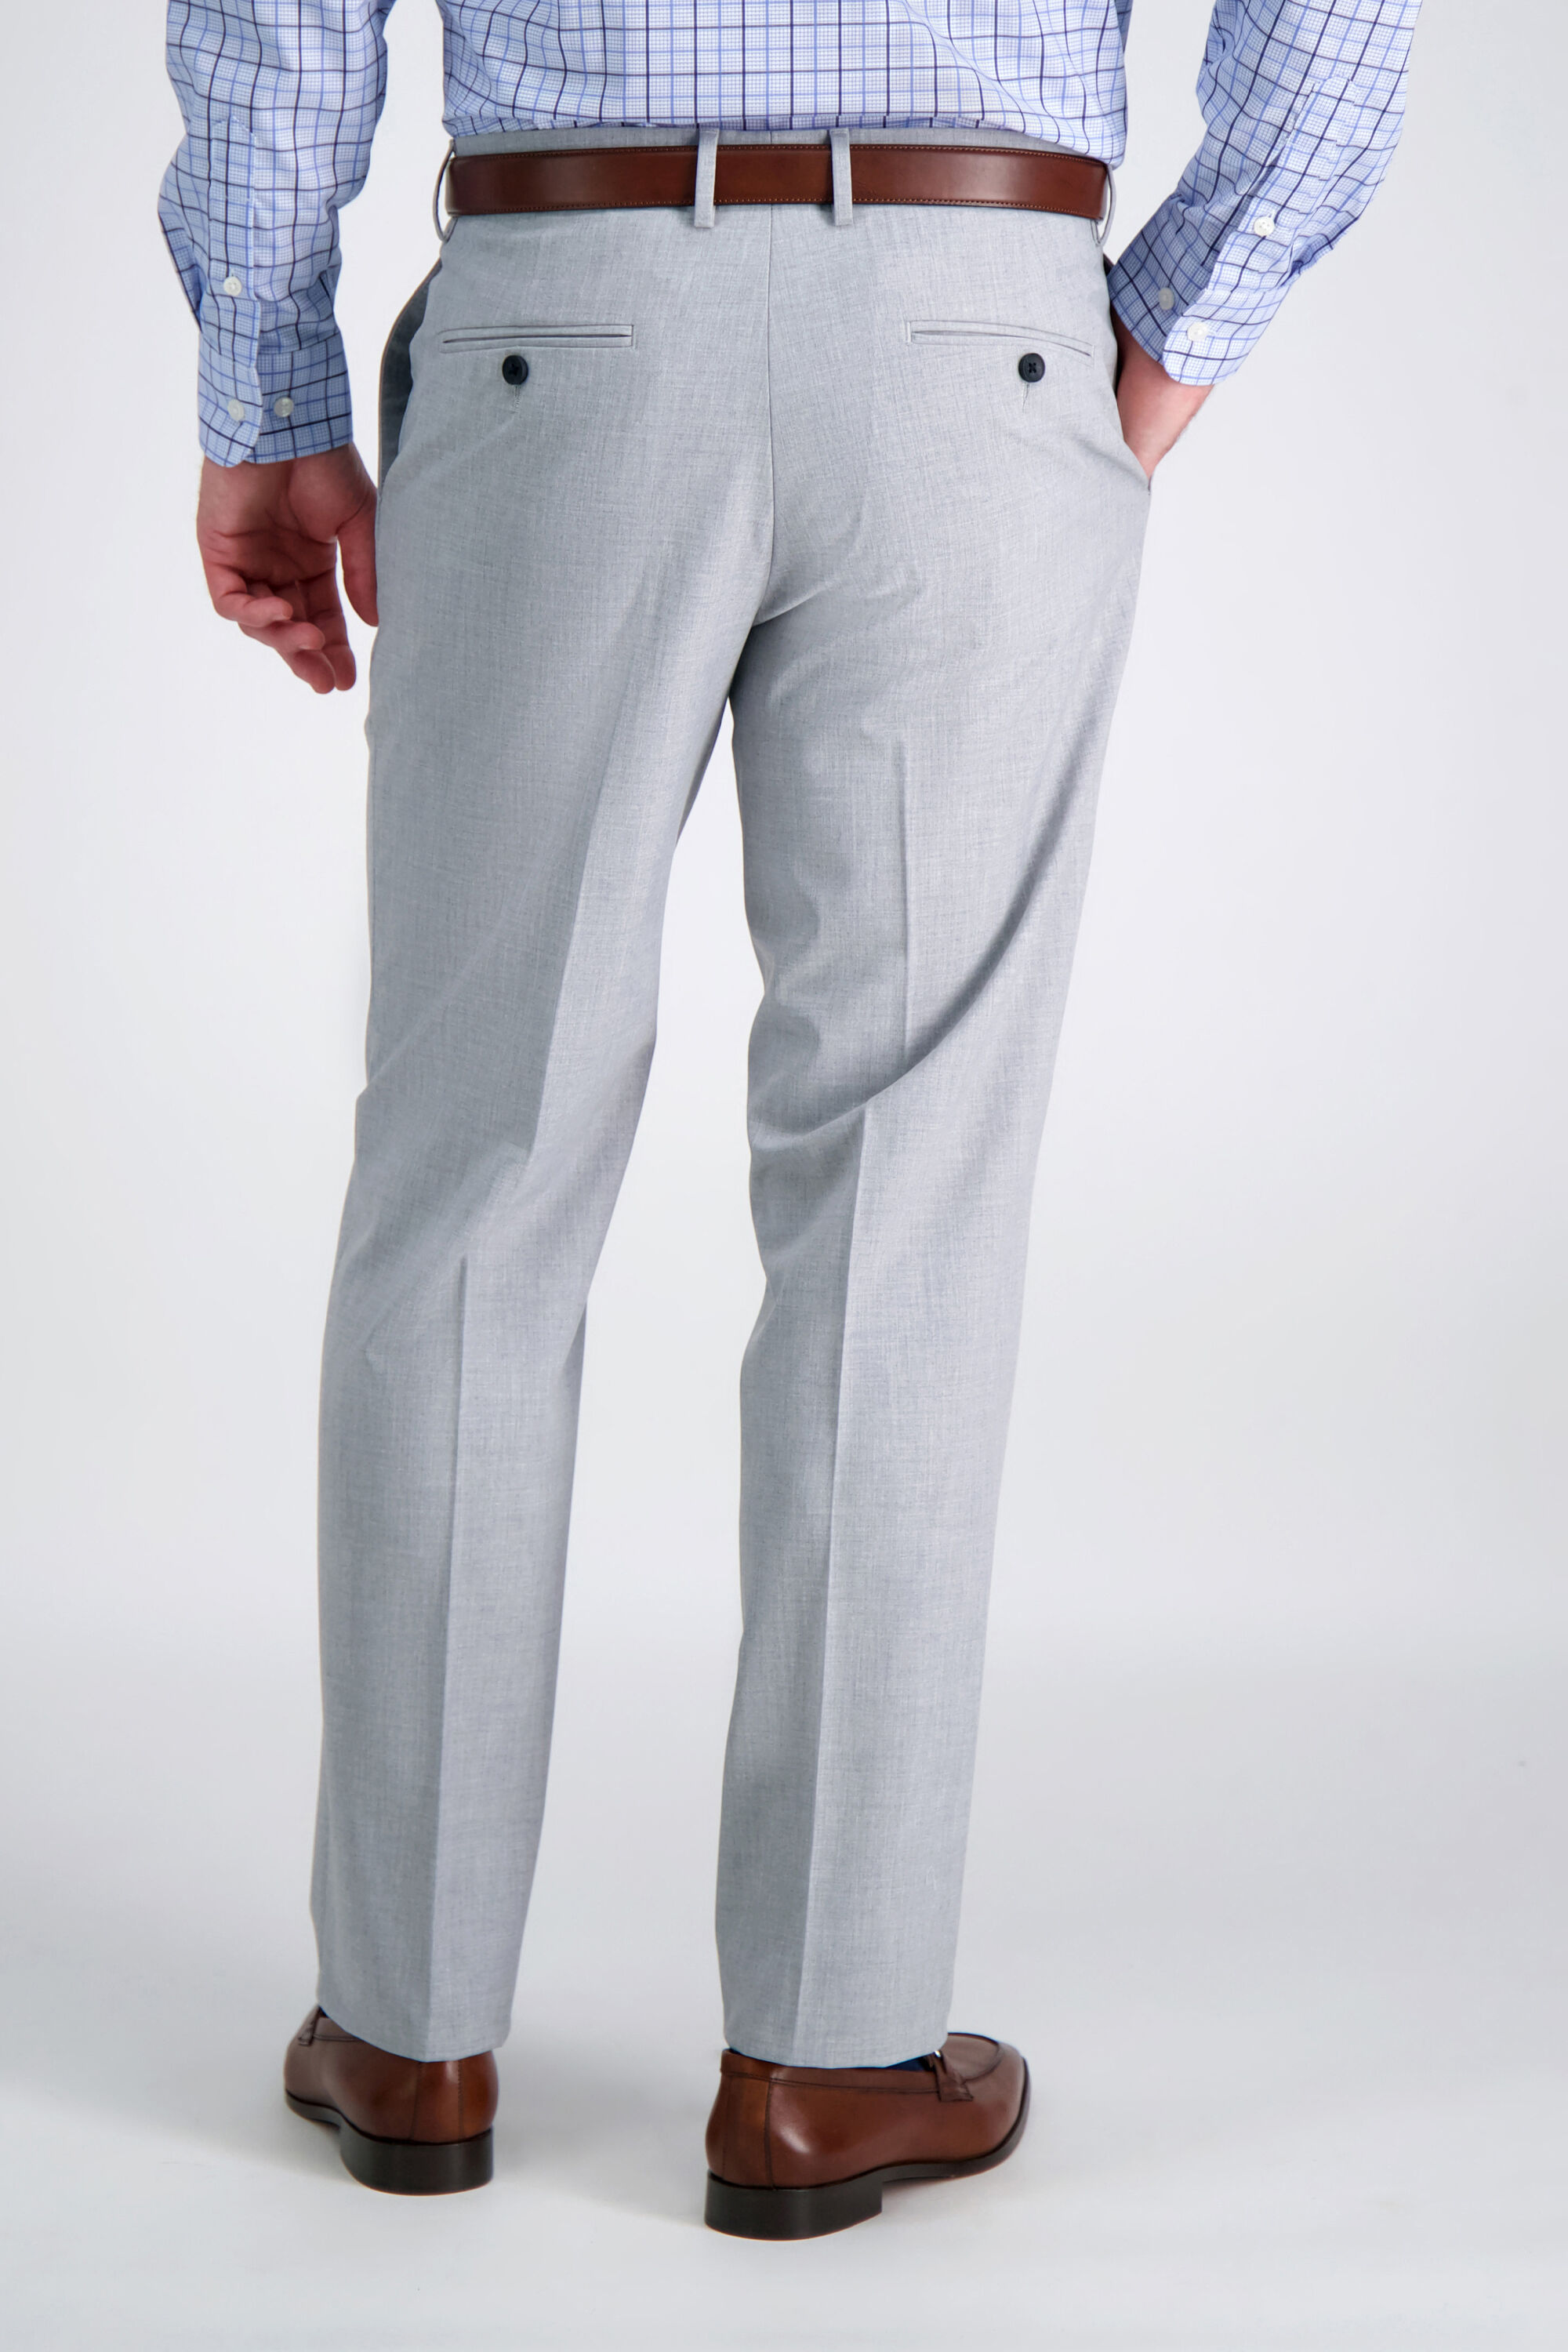 light gray dress pants